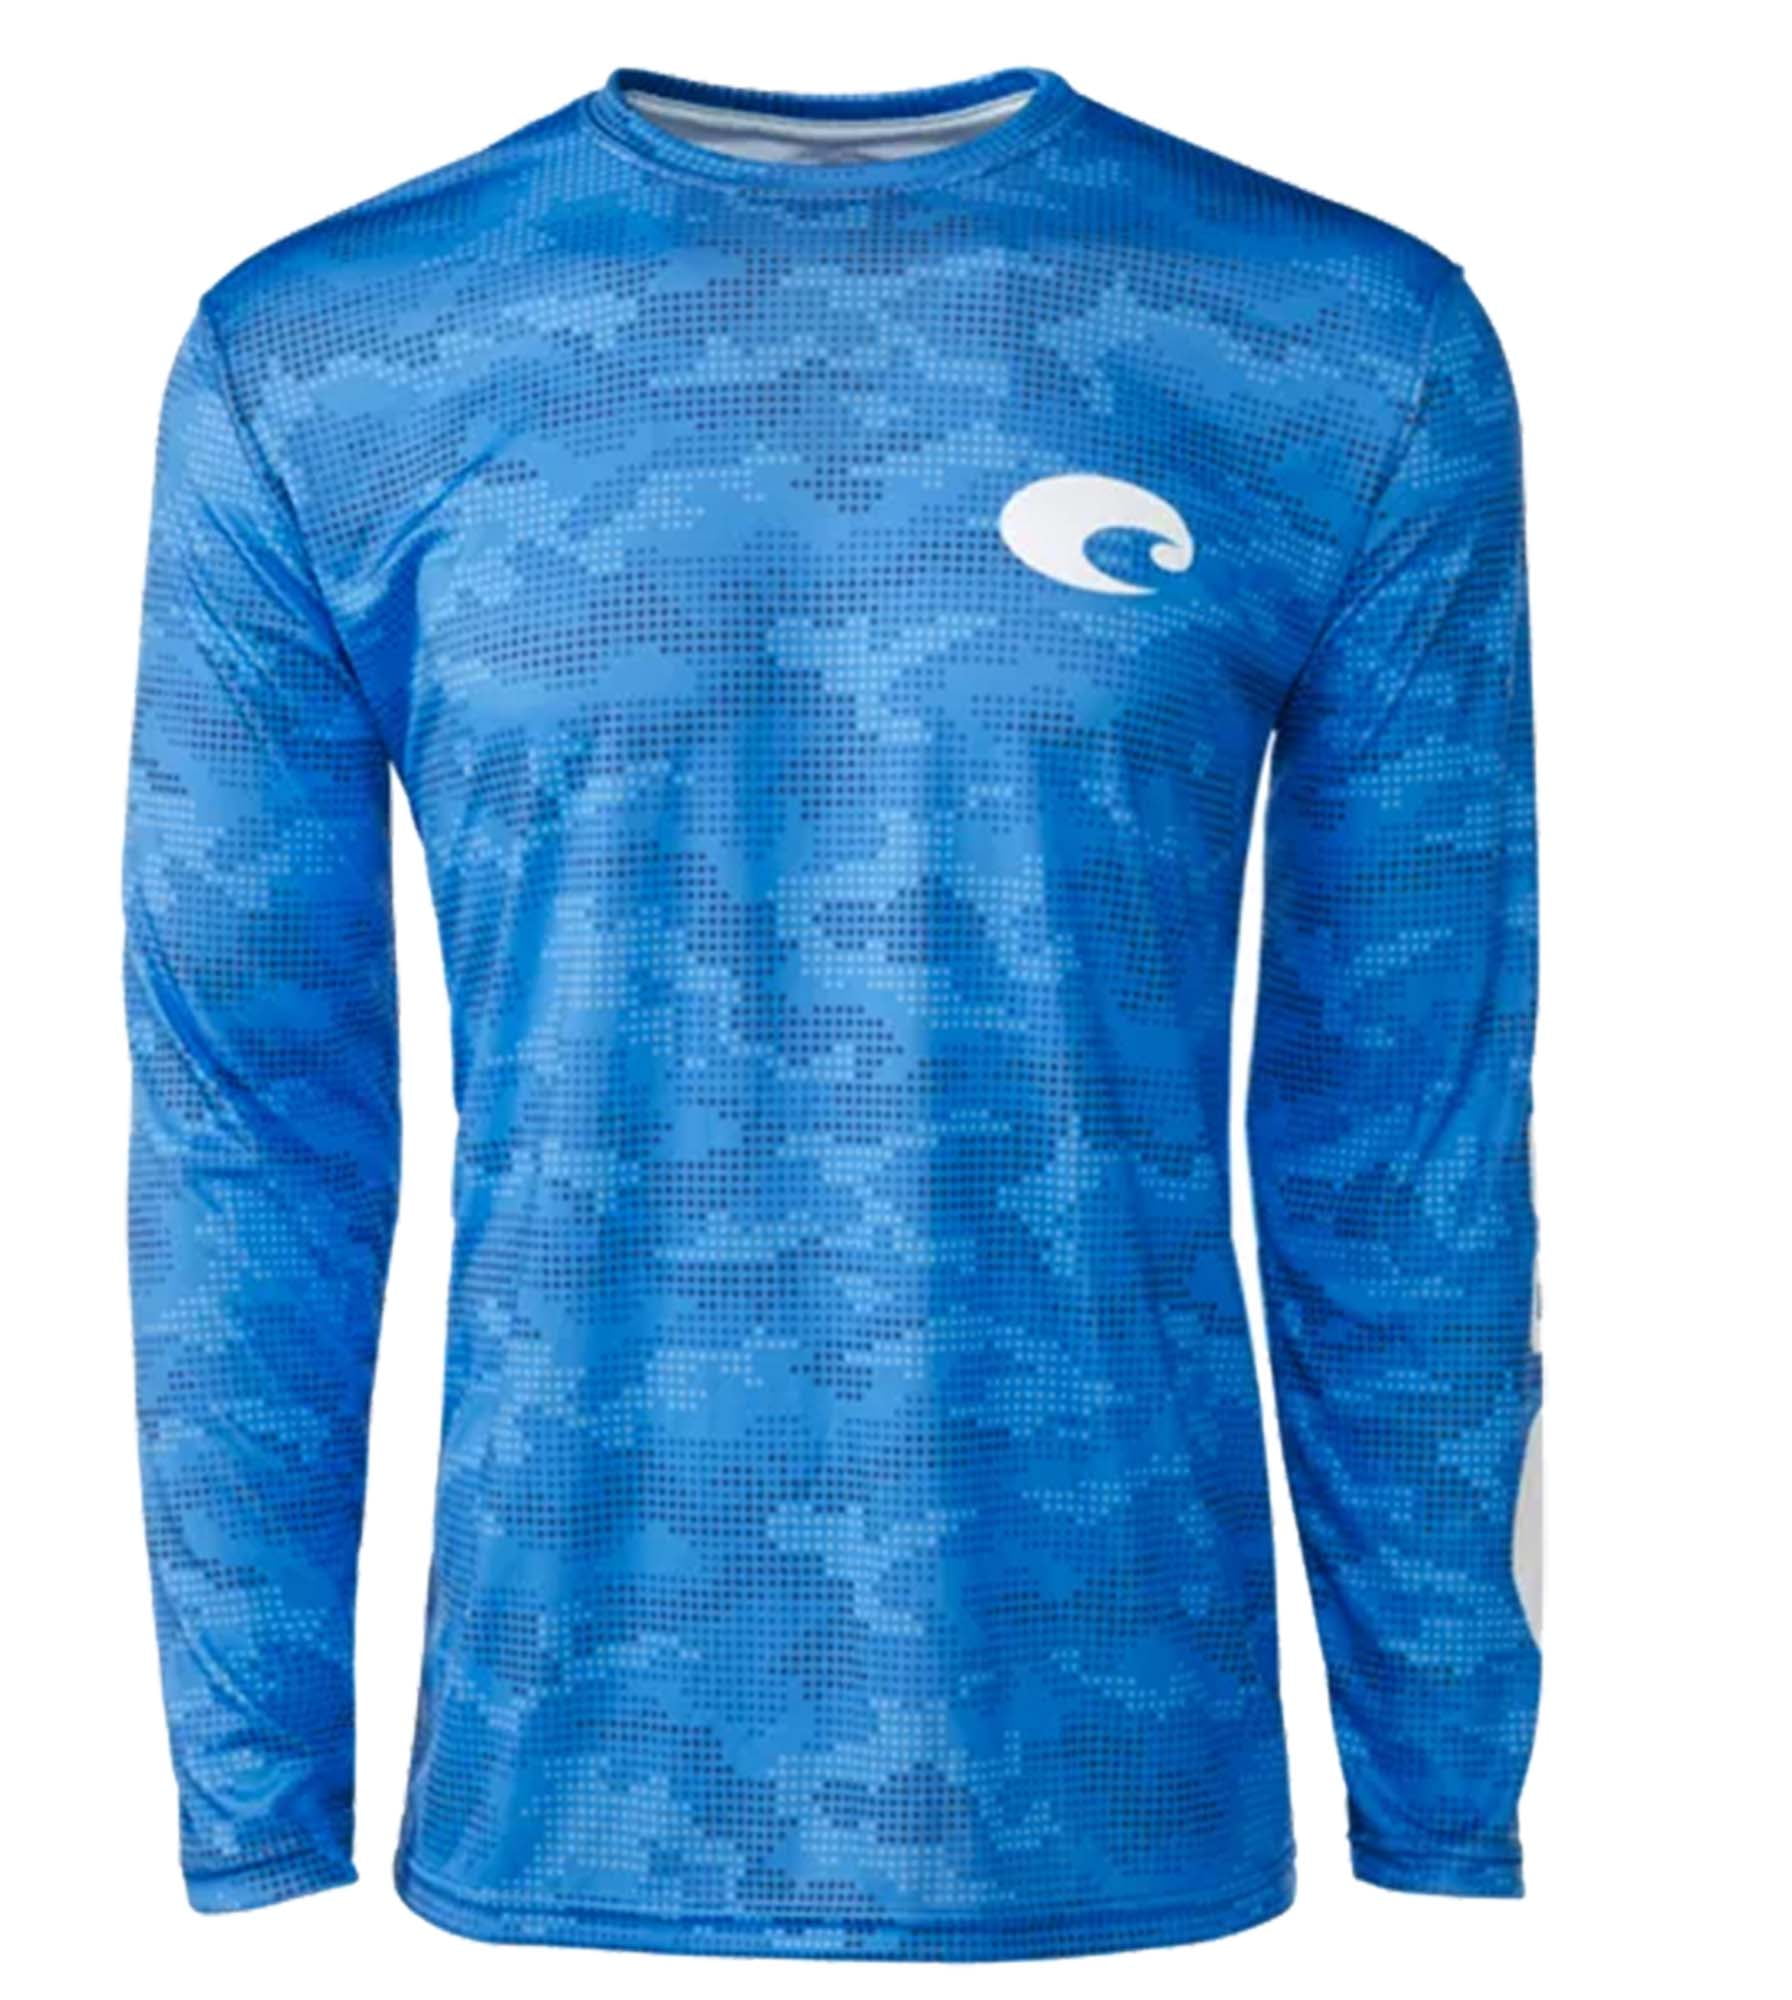 Pick Size 40% Off Costa Tech Power Performance Shirt Blue UPF 50 